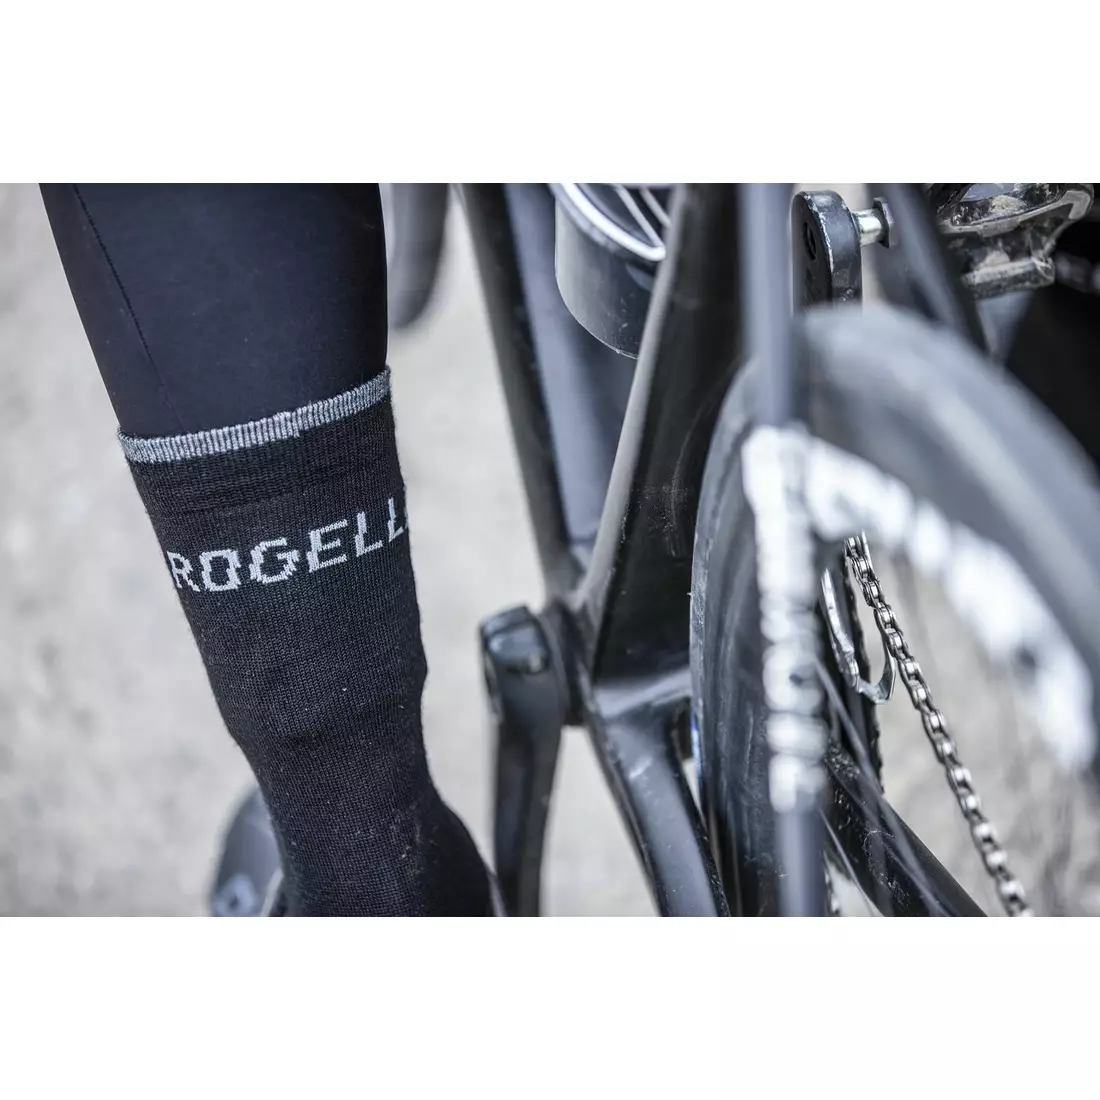 ROGELLI zimné cyklistické ponožky WOOL 2-pack grey ROG351053.36.39